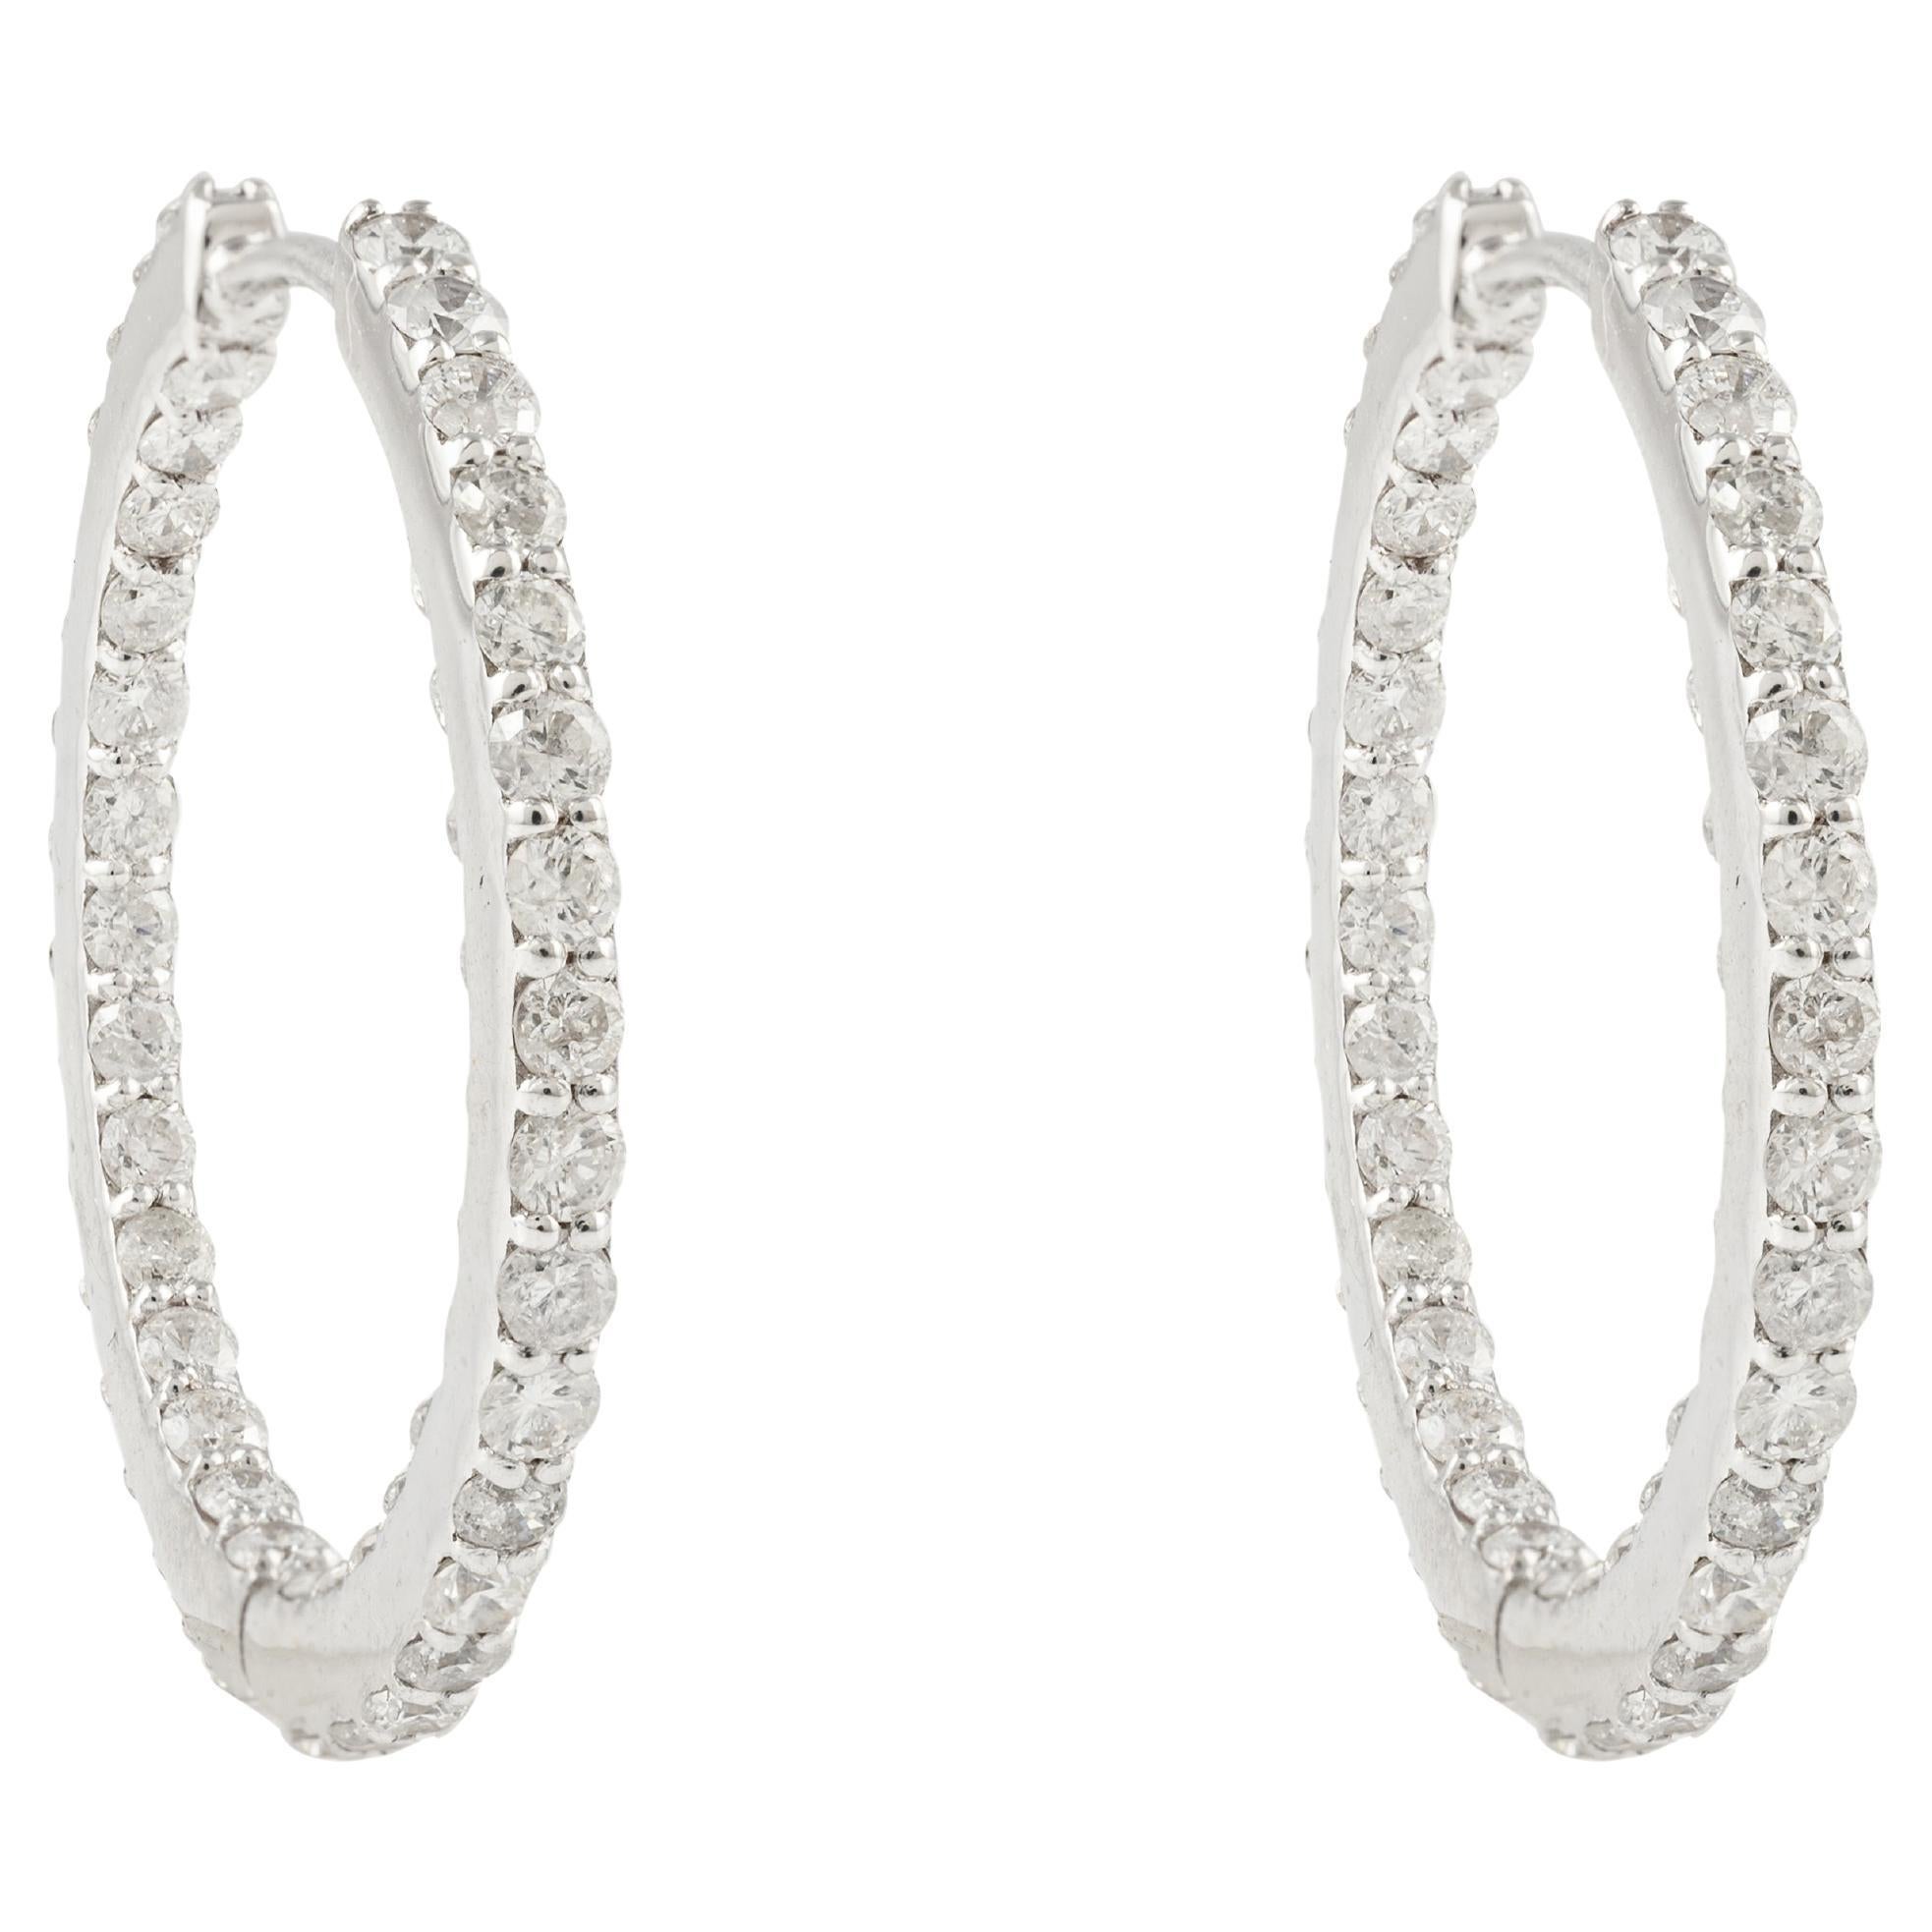 2.8 Carat Hoop Diamond Earrings For Women Studded in 18k Solid White Gold For Sale